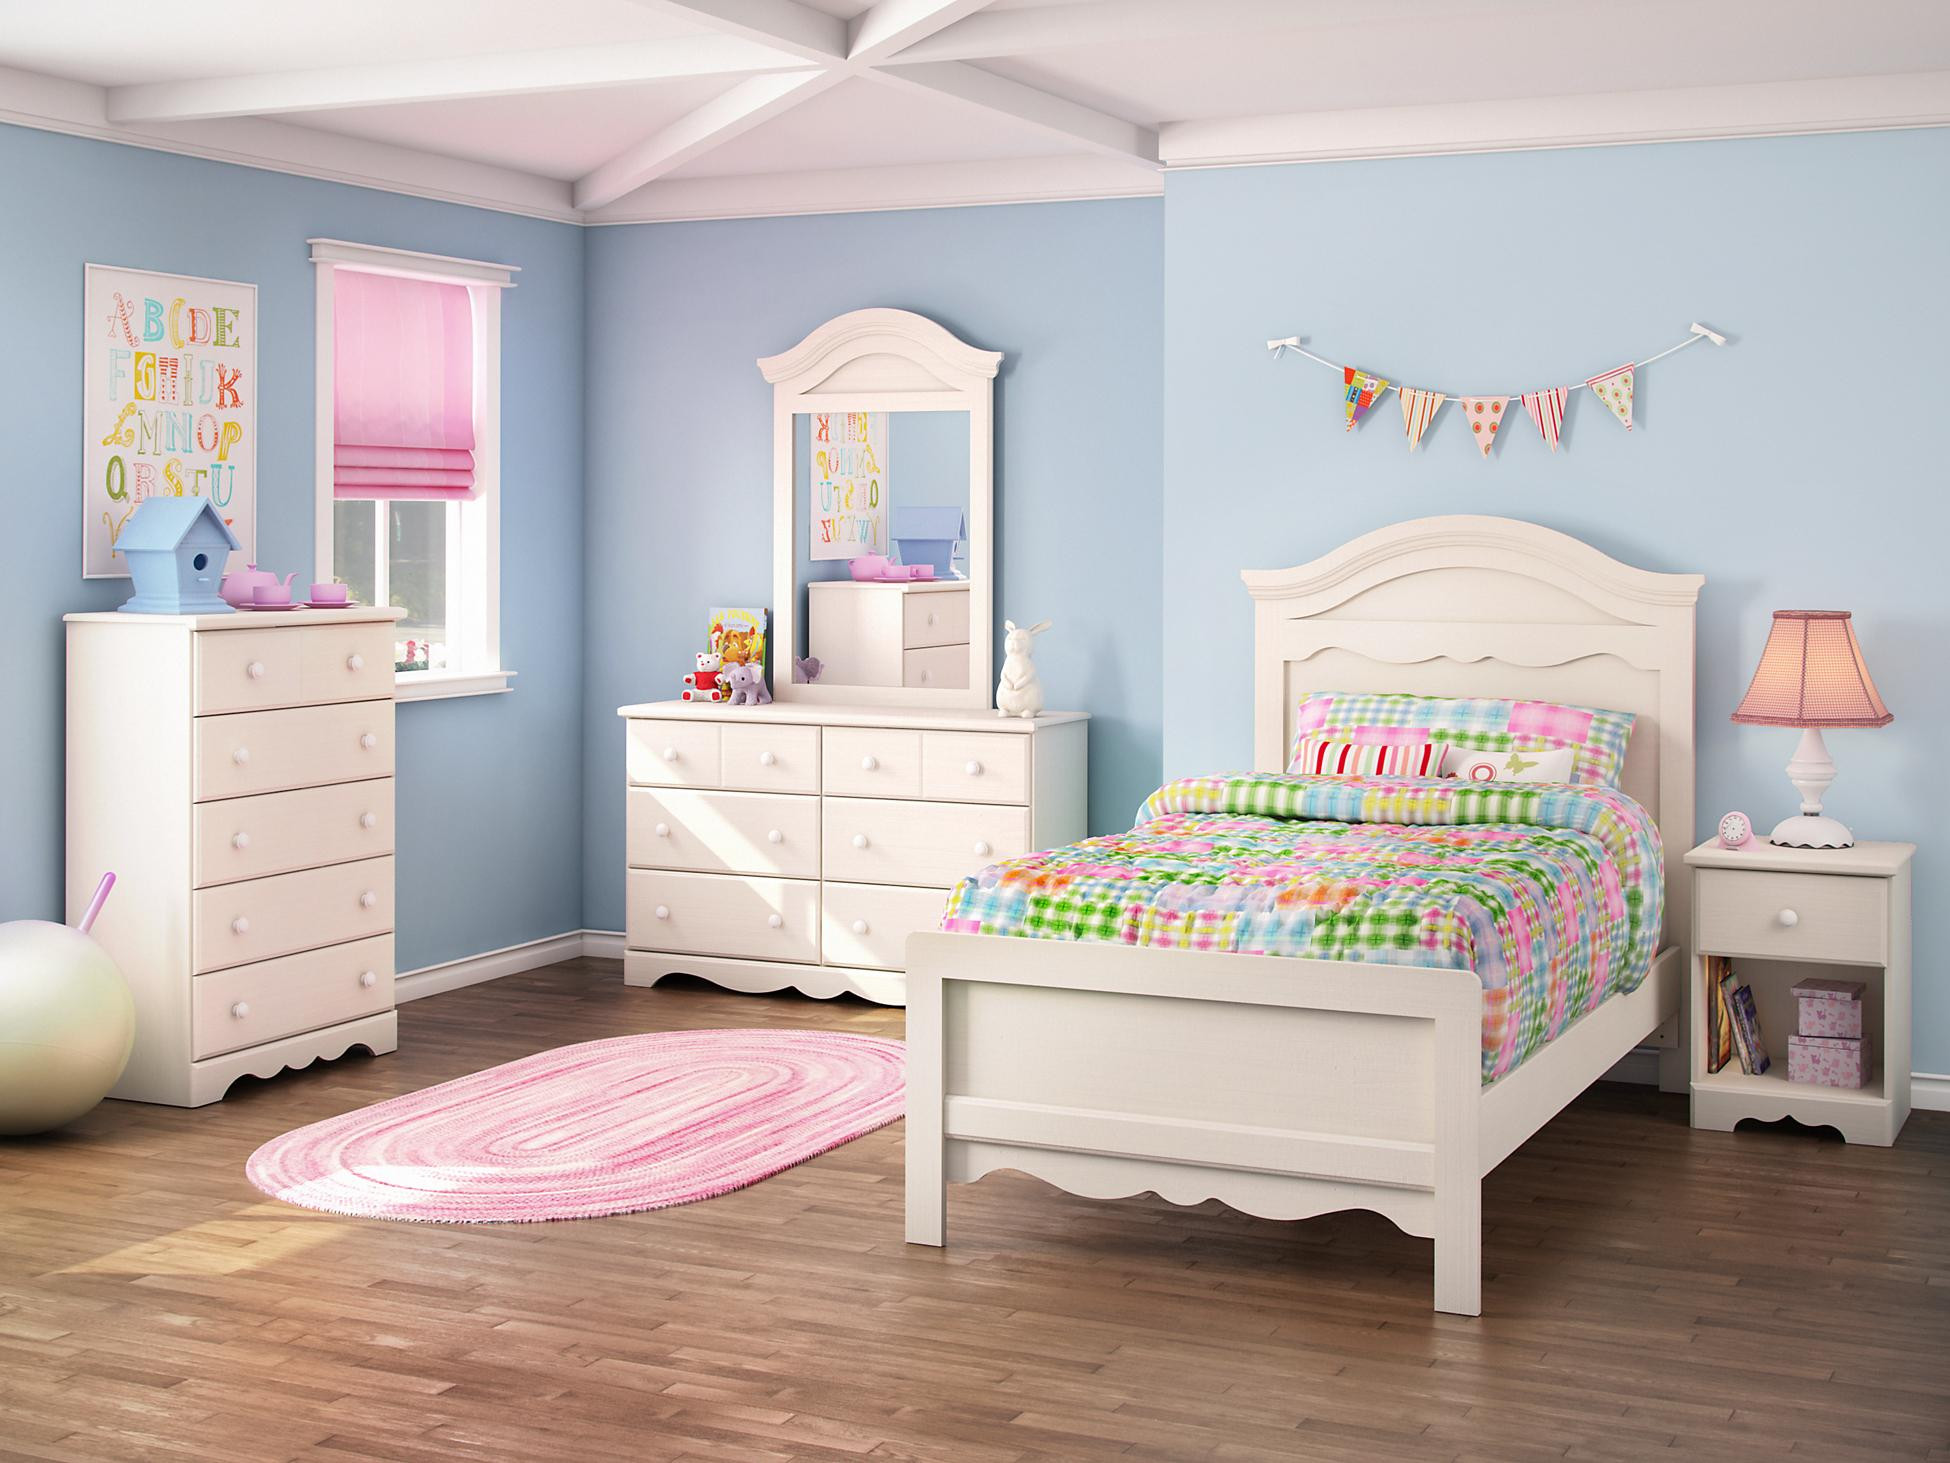 Girls Bedroom Furniture Sets
 25 Romantic and Modern Ideas for Girls Bedroom Sets